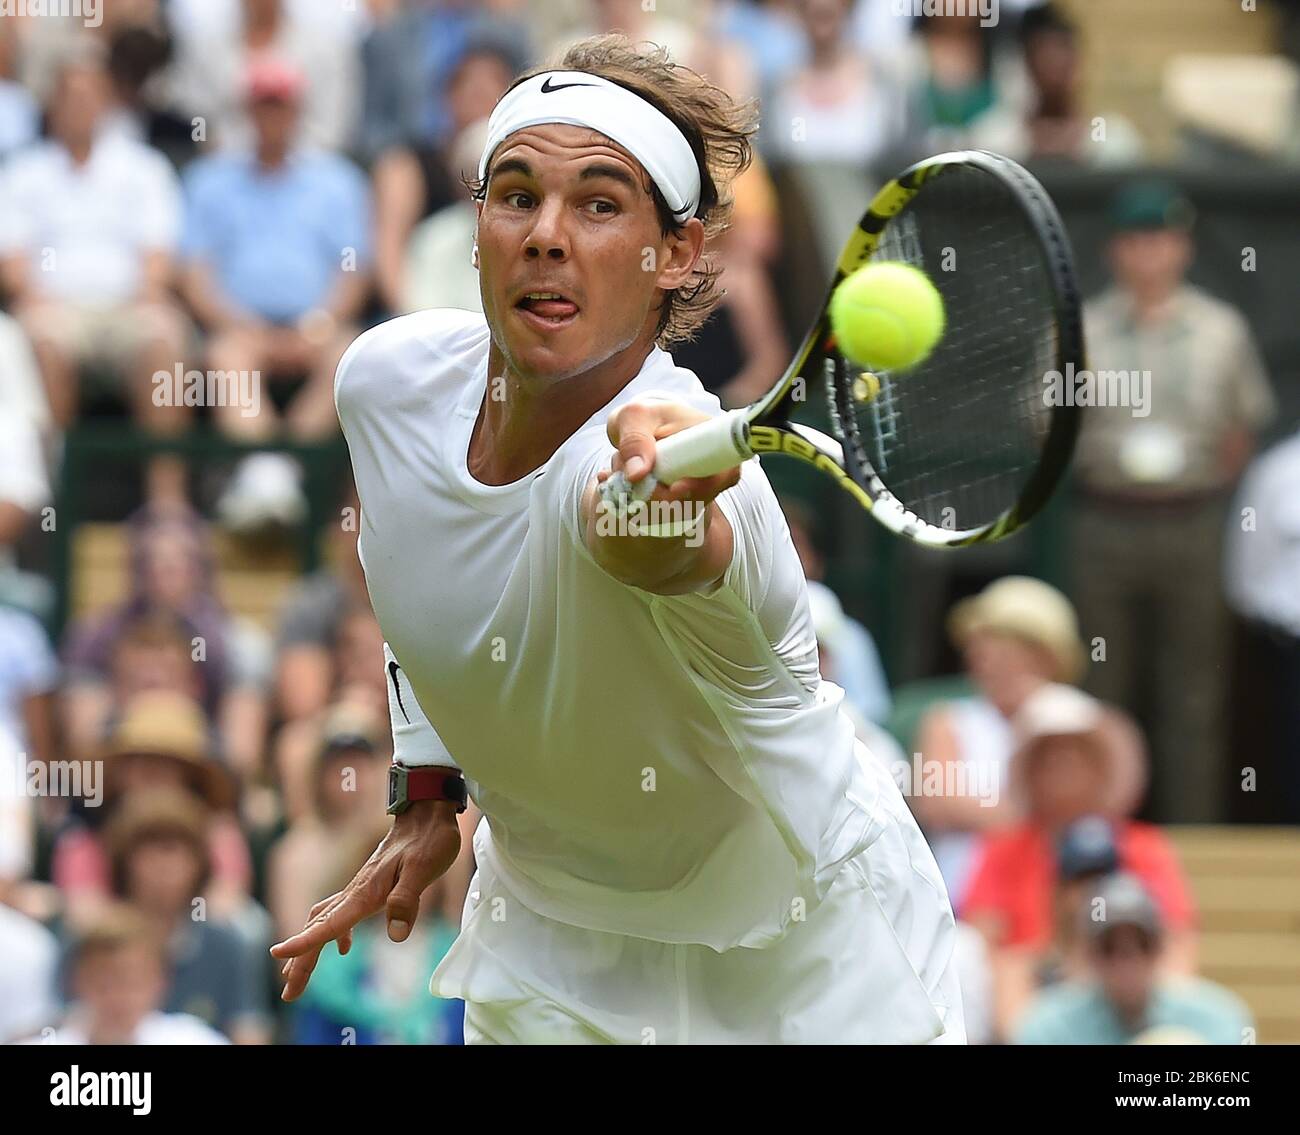 23/06/14. Wimbledon Tennis Championships 2014, Wimbledon, Londra. Mens Singles, Martin Klizan, (SVK) contro Rafael Nadal, (ESP) (2) su Centre Foto Stock